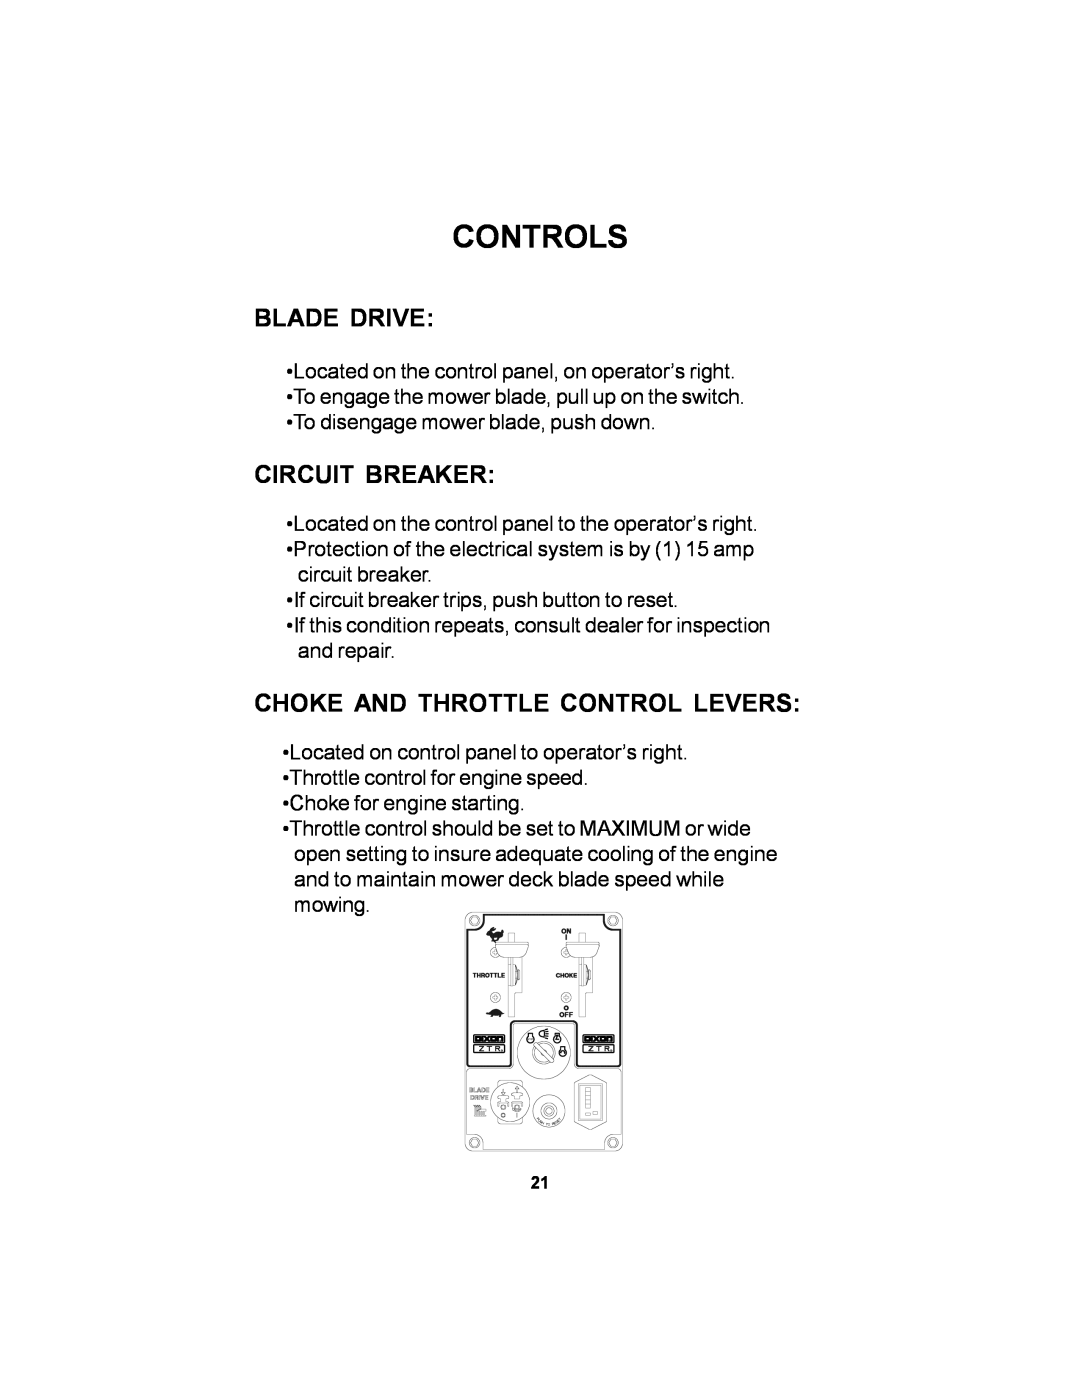 Dixon ELS 60 manual Blade Drive, Circuit Breaker, Choke And Throttle Control Levers, Controls 